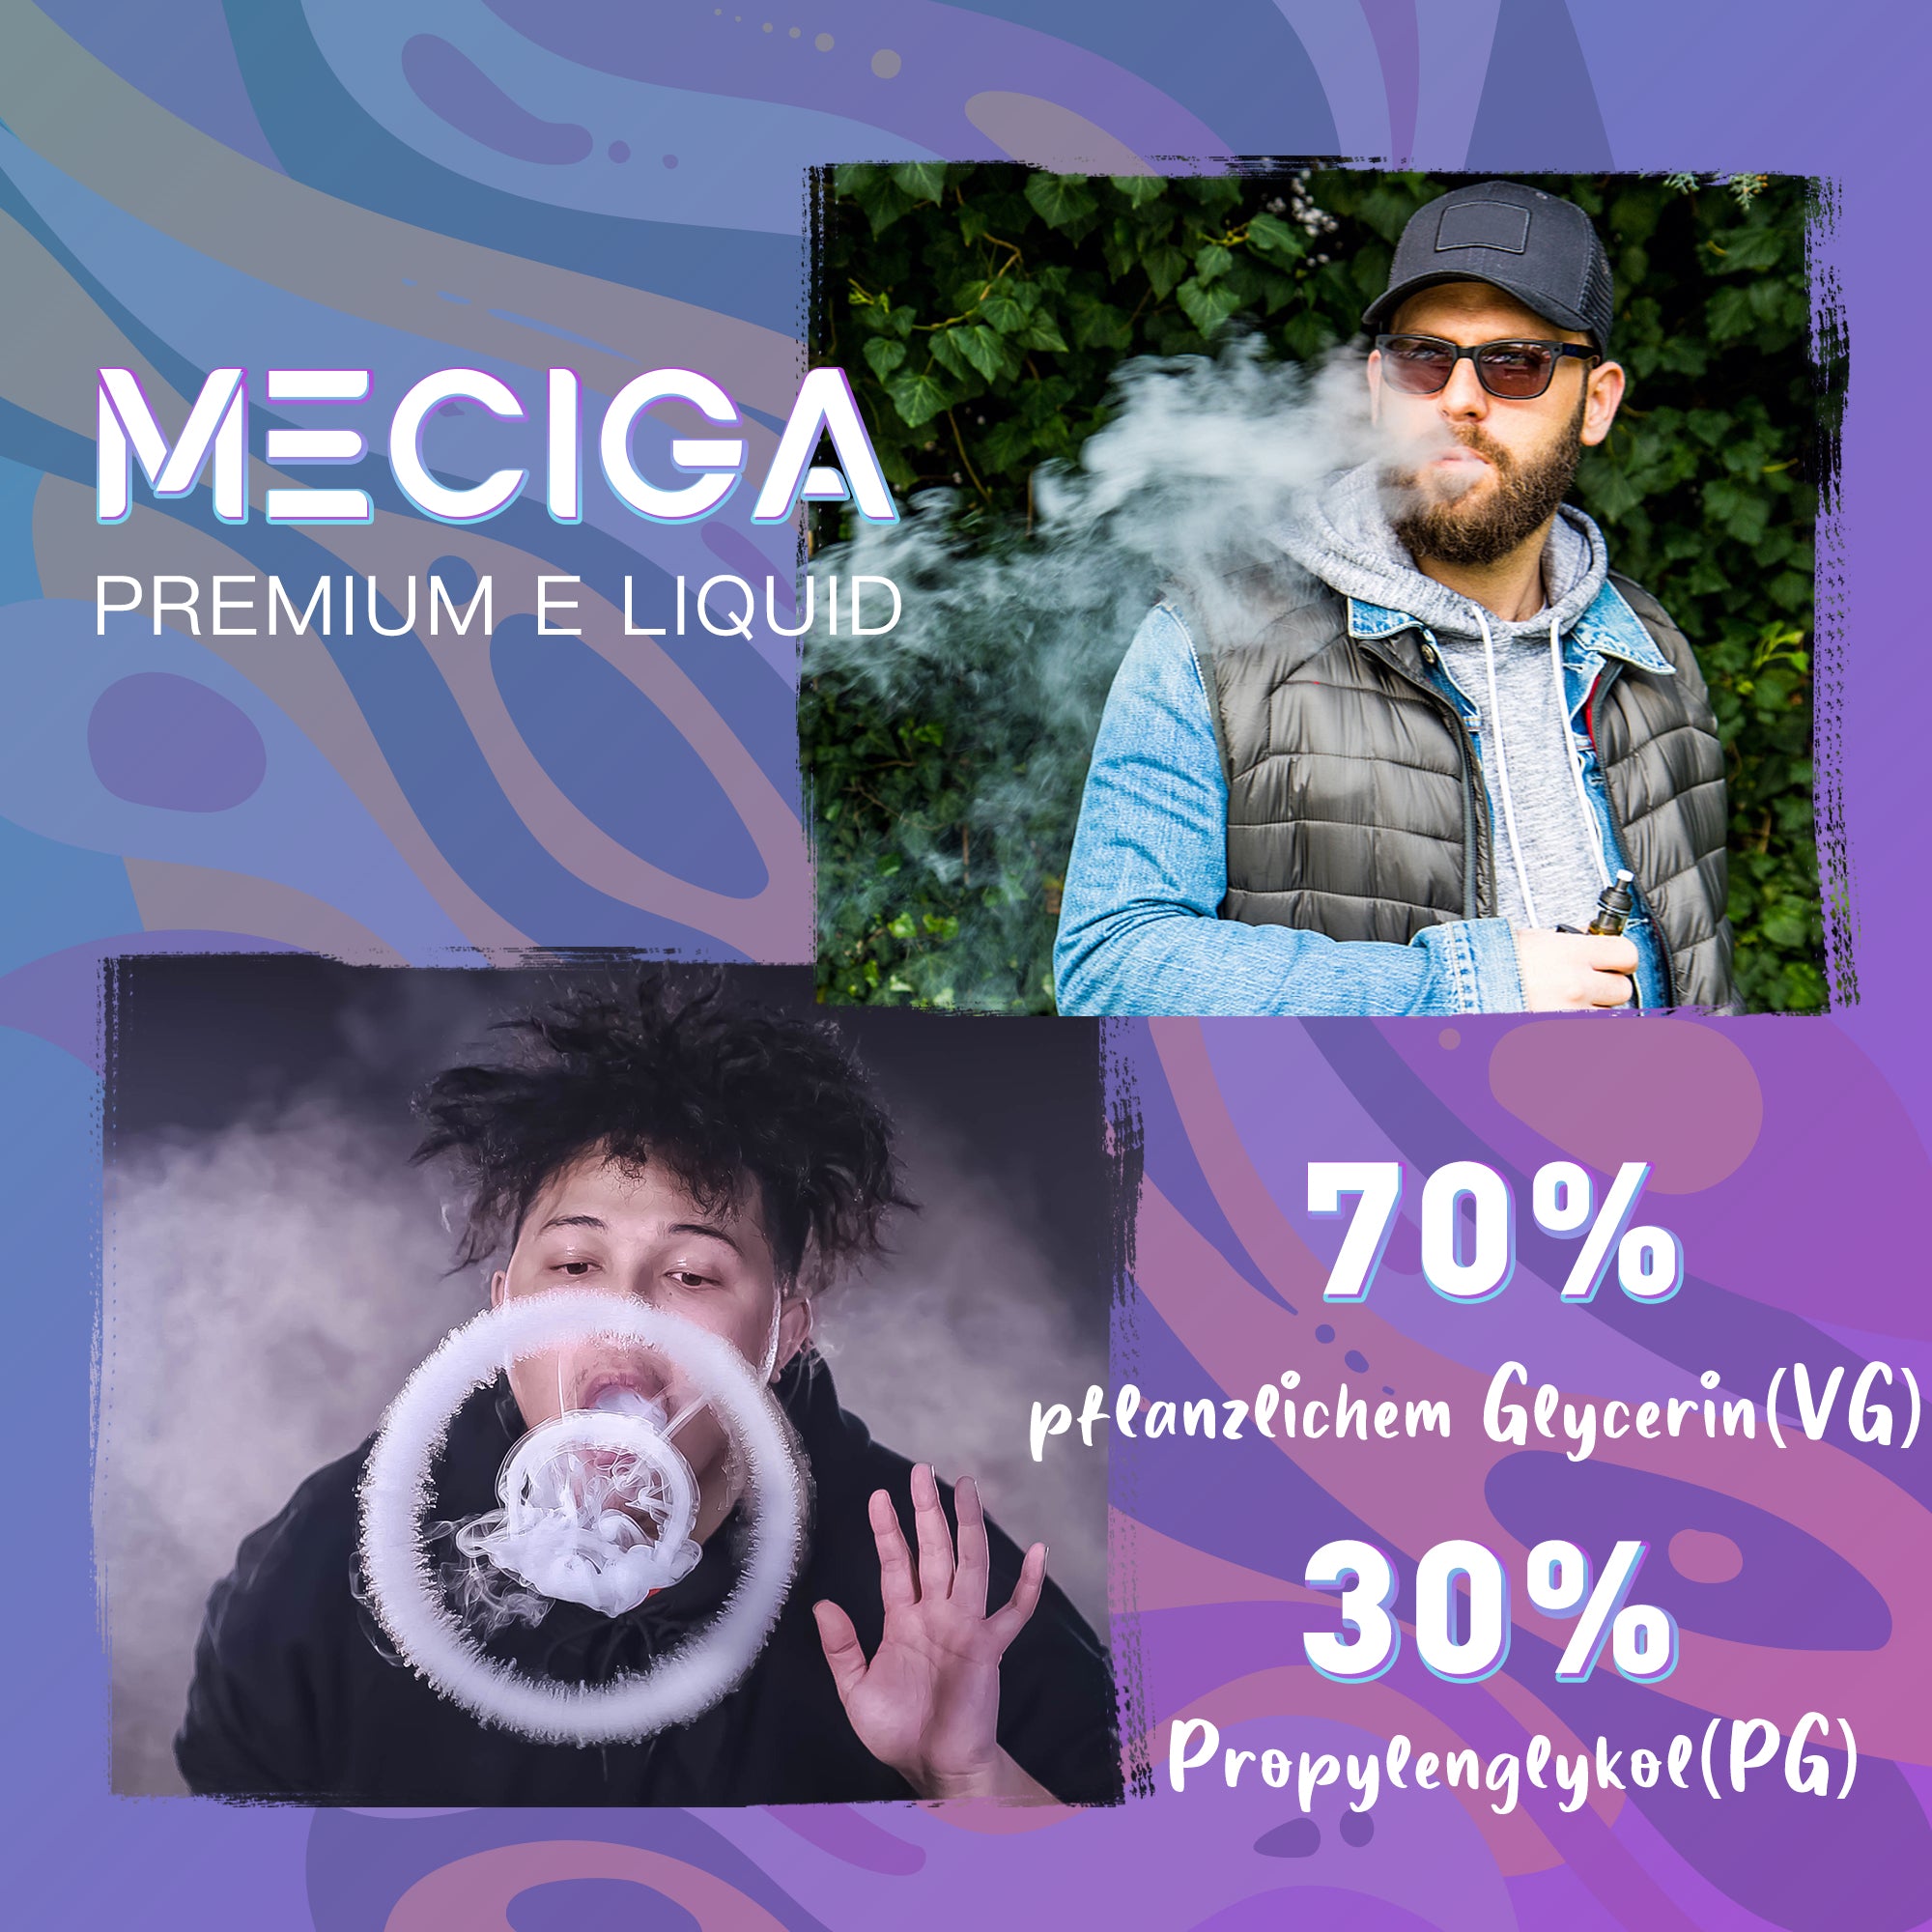 MECIGA E Liquid Collection 5 x 30ml No Nicotine 70/30